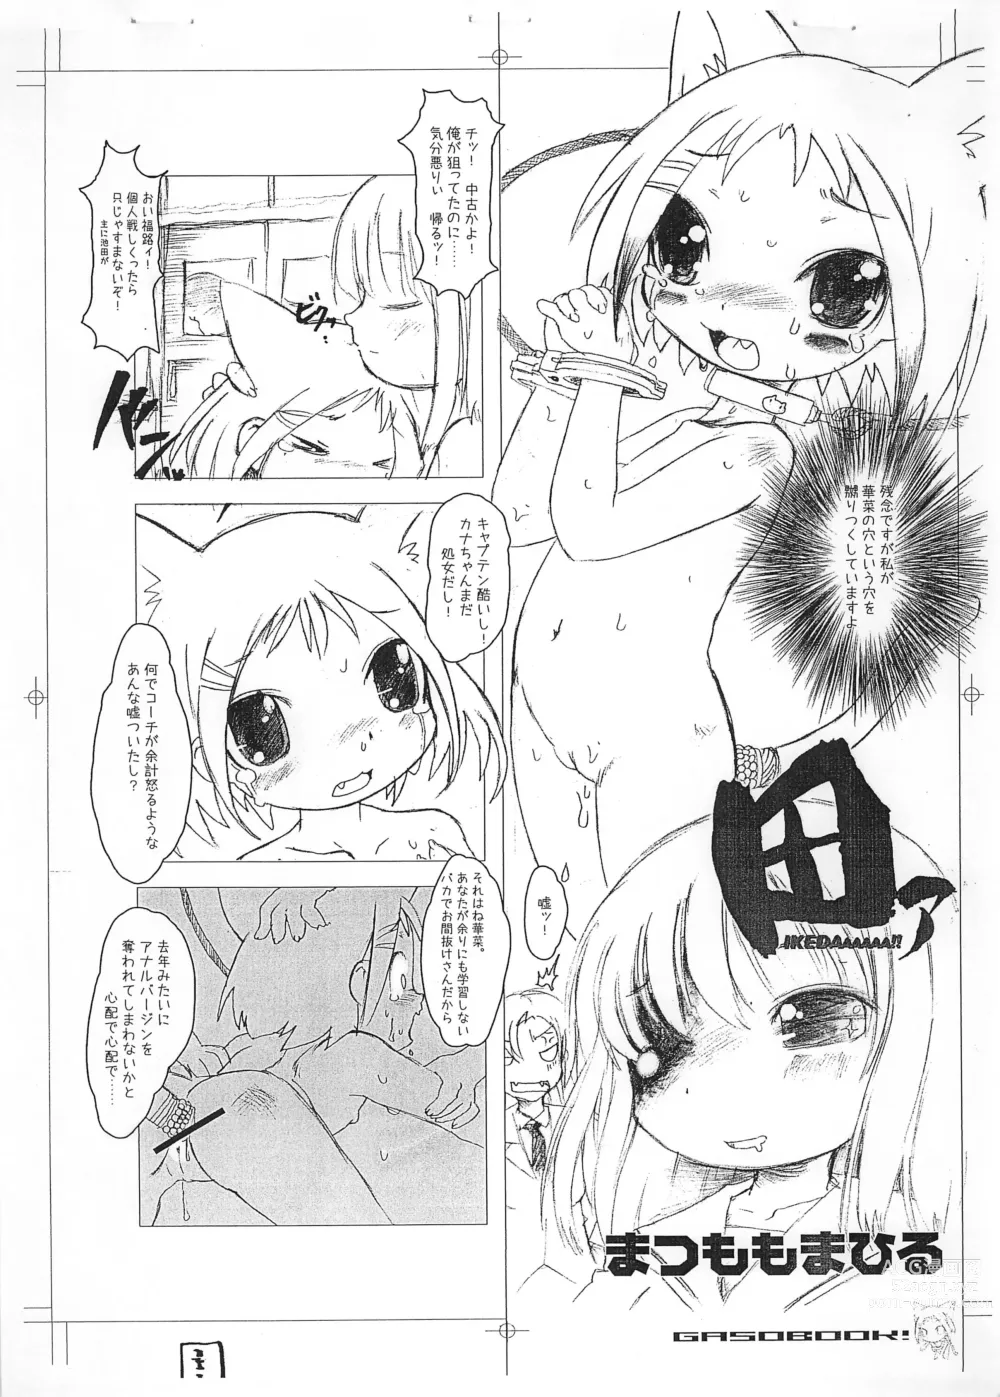 Page 3 of doujinshi Daa